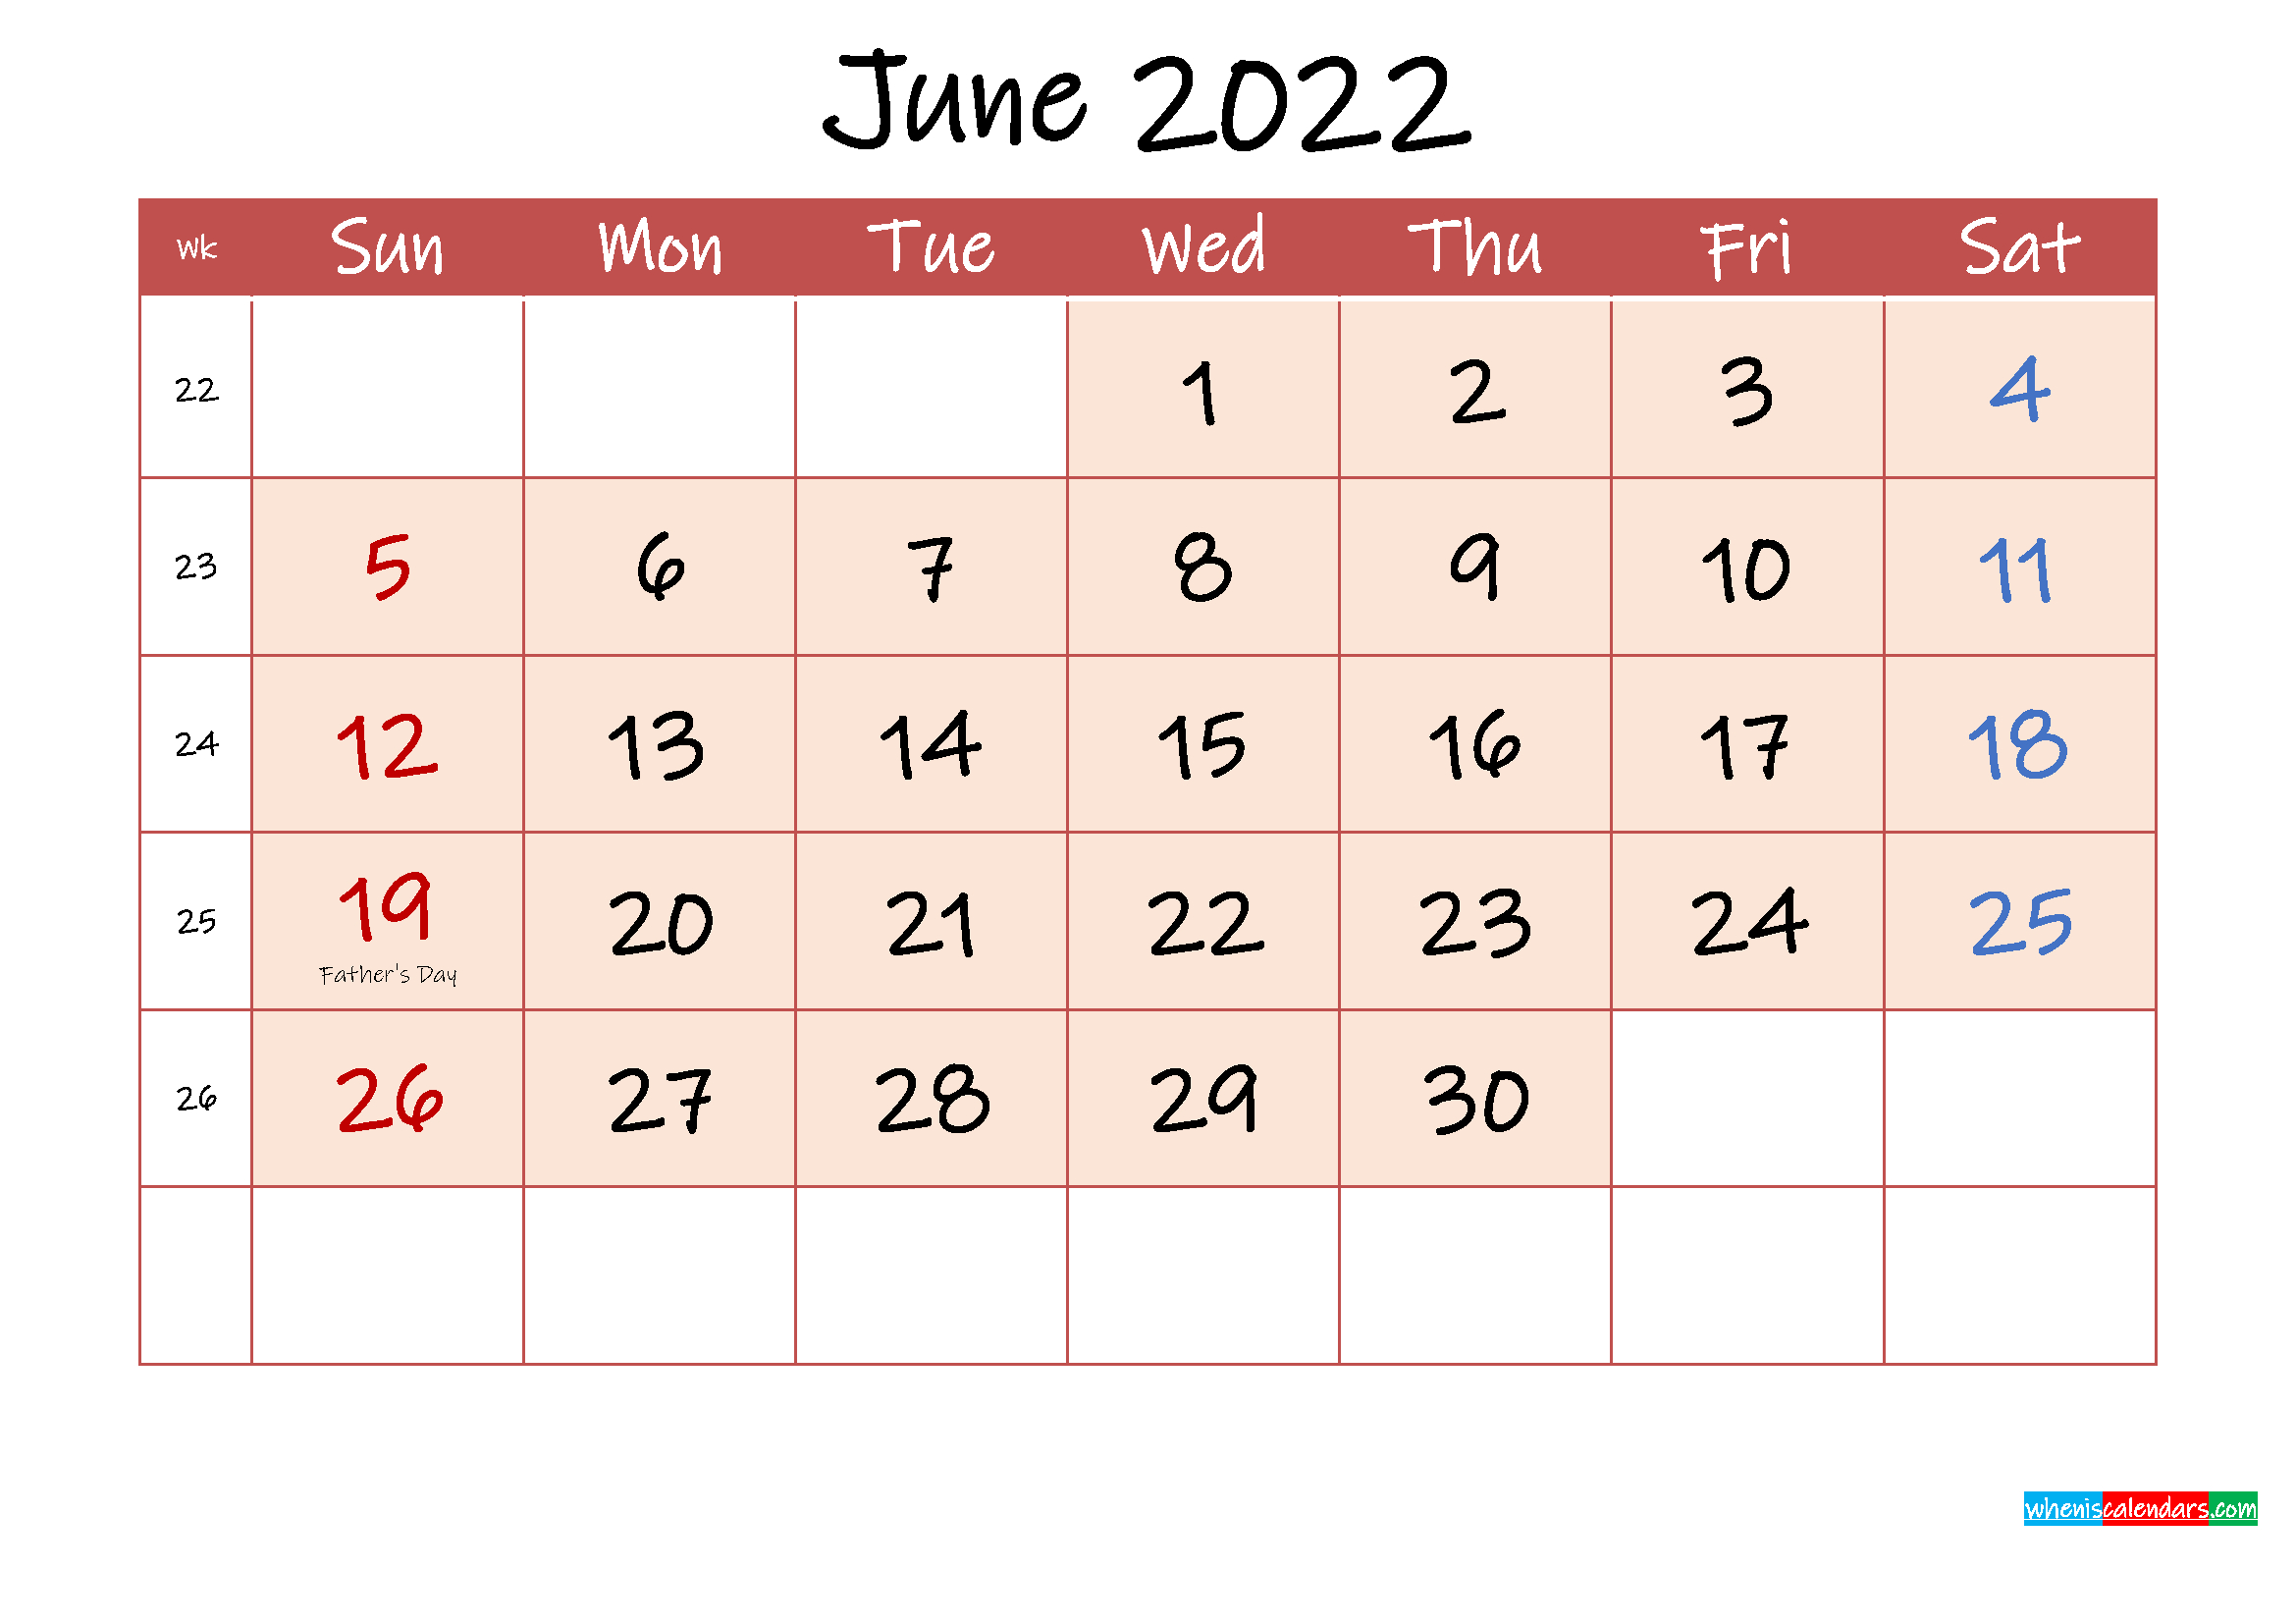 June 2022 Free Printable Calendar With Holidays - Template  June 2022 Printable Calendar